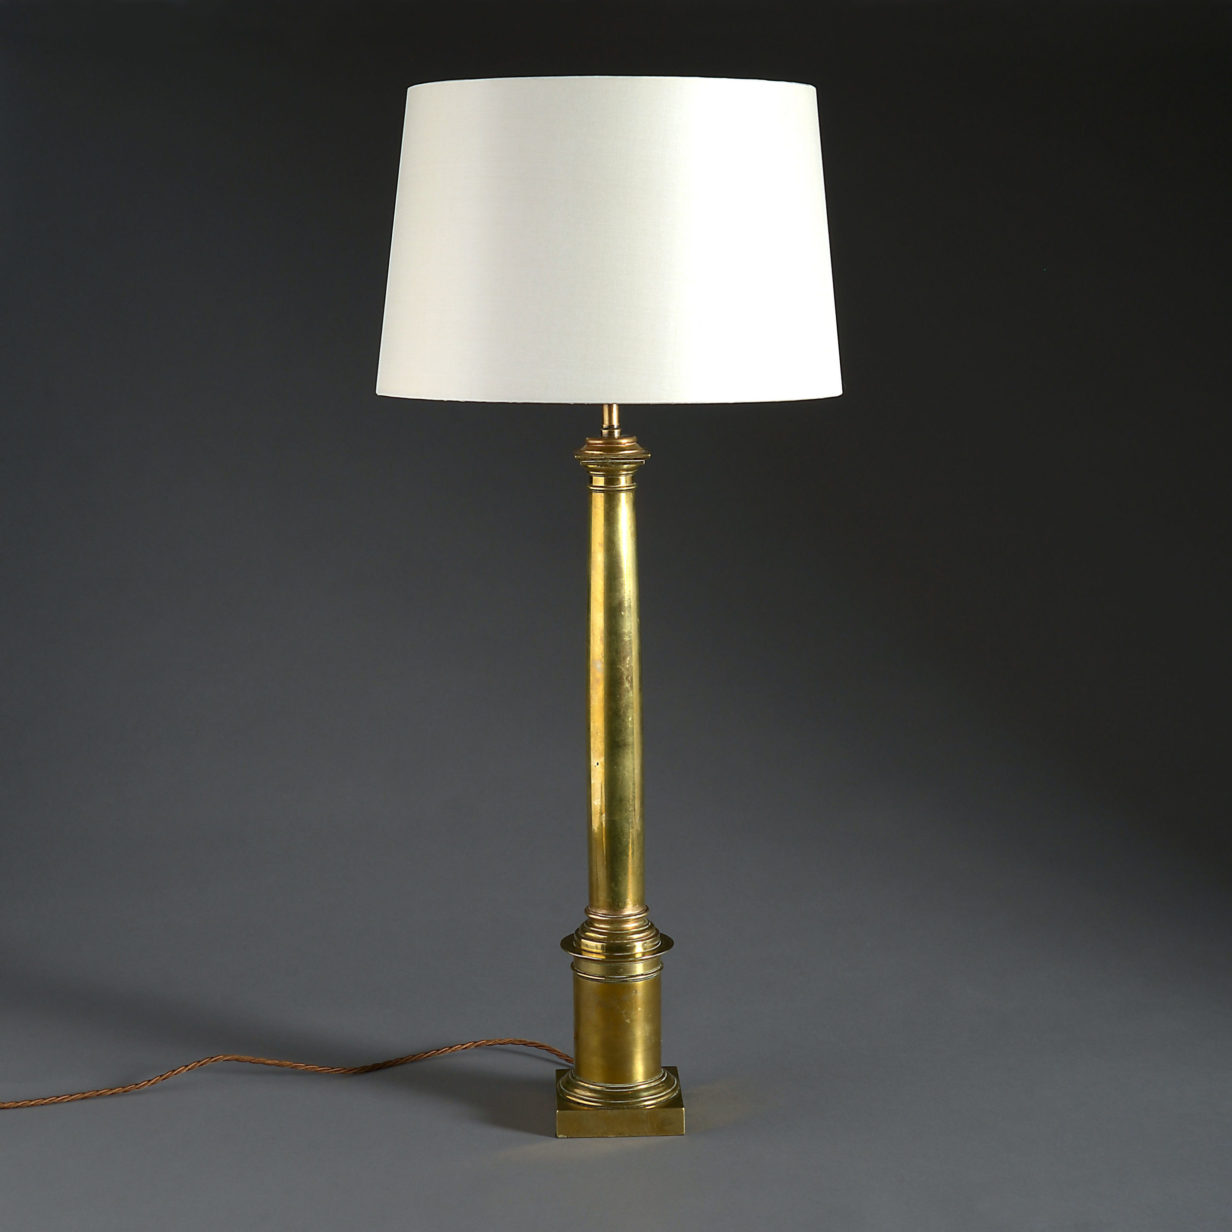 A 19th century brass column lamp